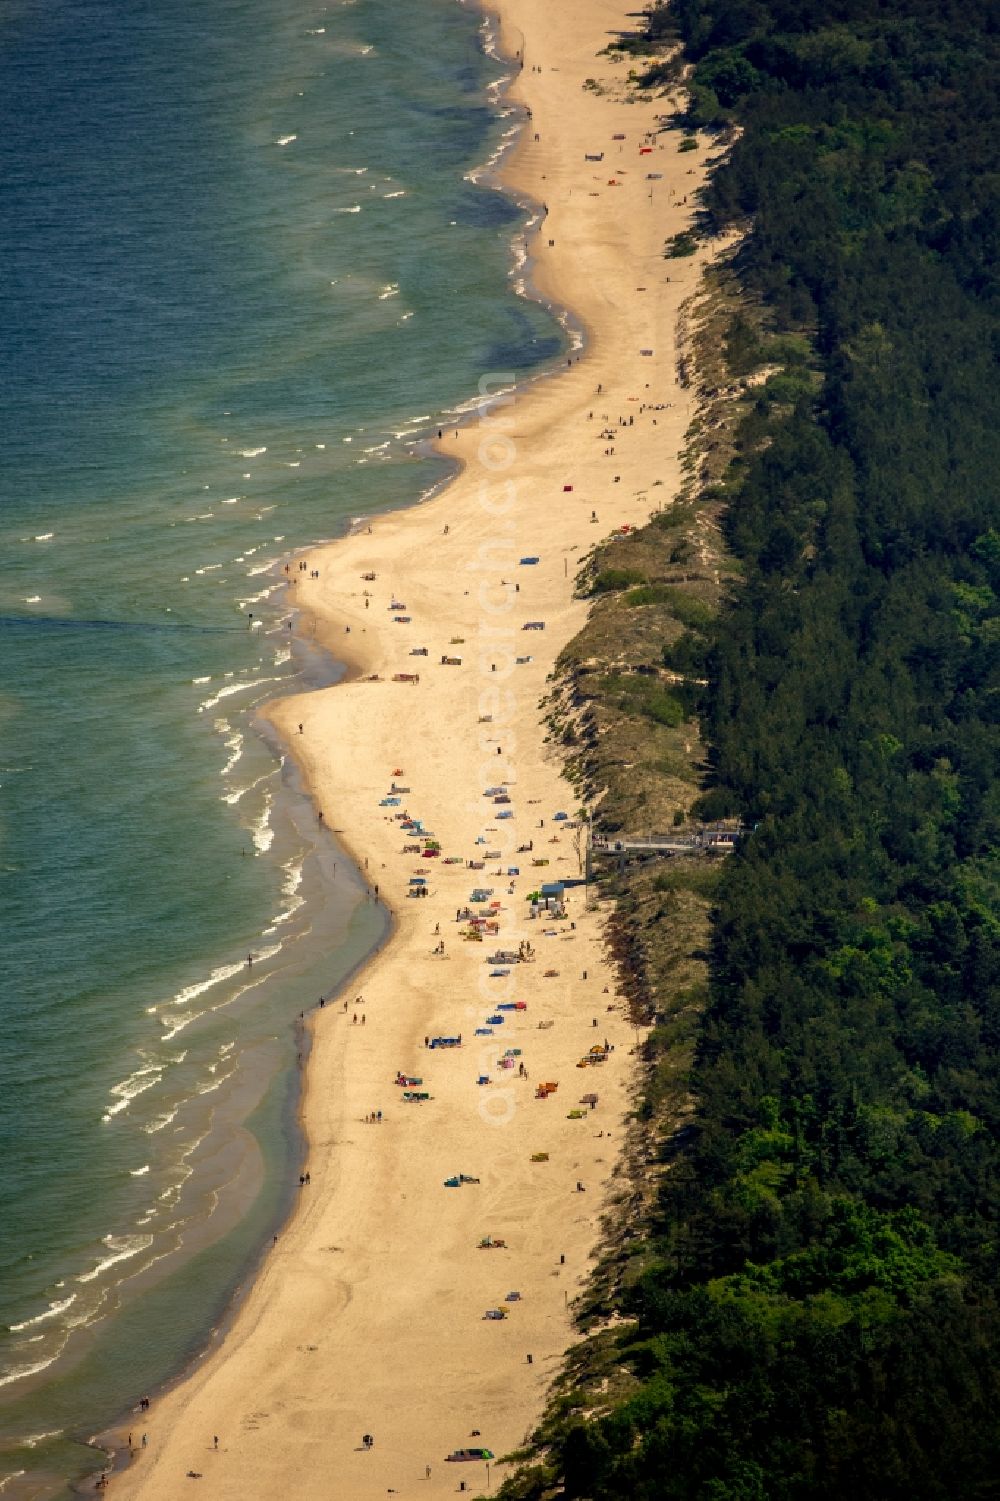 Kolobrzeg - Kolberg from above - Beach landscape on the Baltic Sea in Kolberg in West Pomerania, Poland